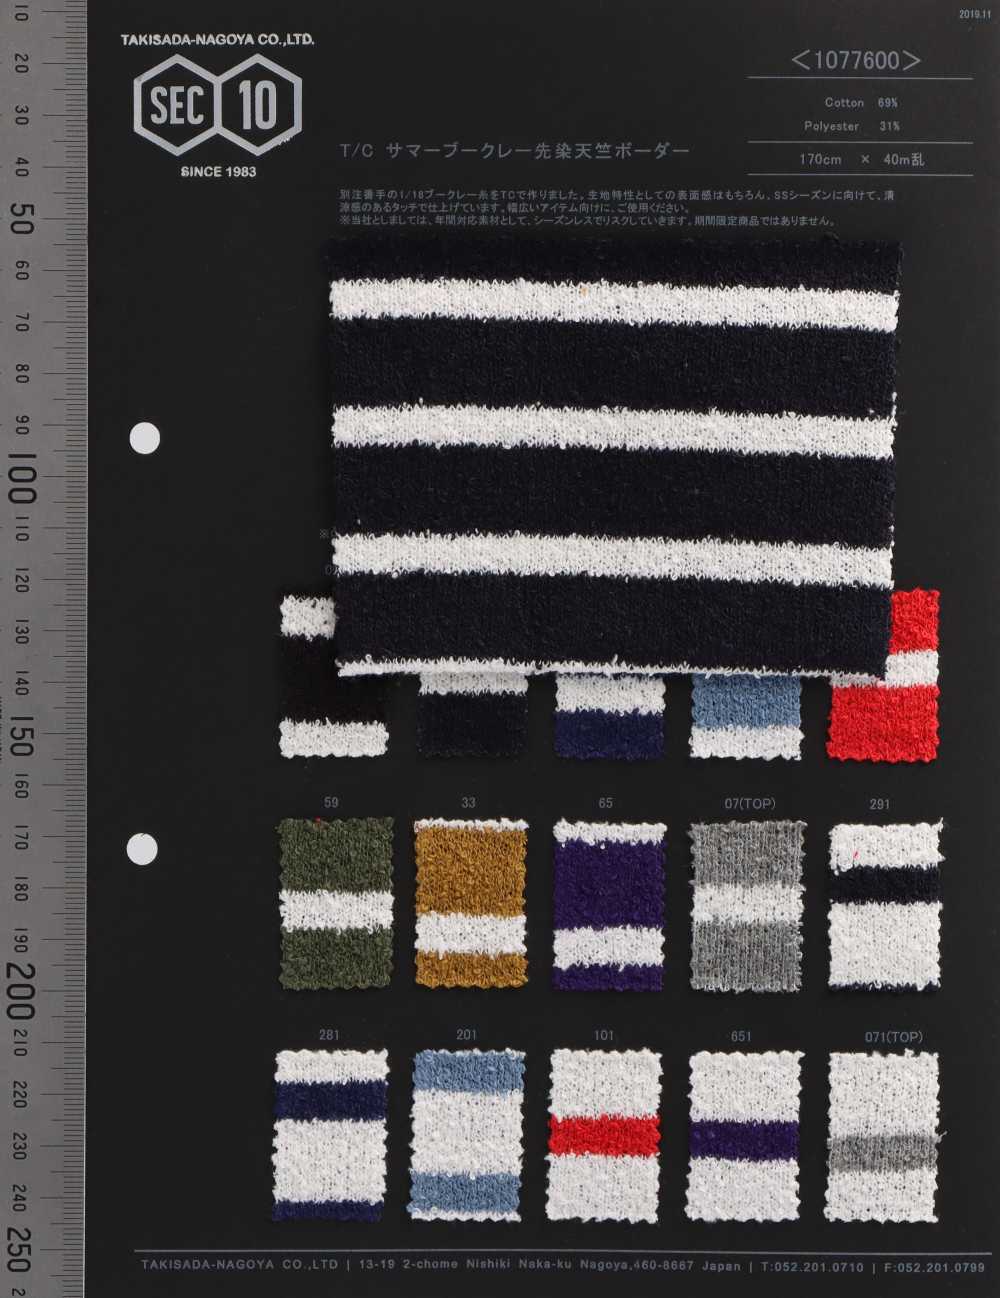 1077600 TC Boucle Yarn Dyed Cotton Jersey Querstreifen[Textilgewebe] Takisada Nagoya